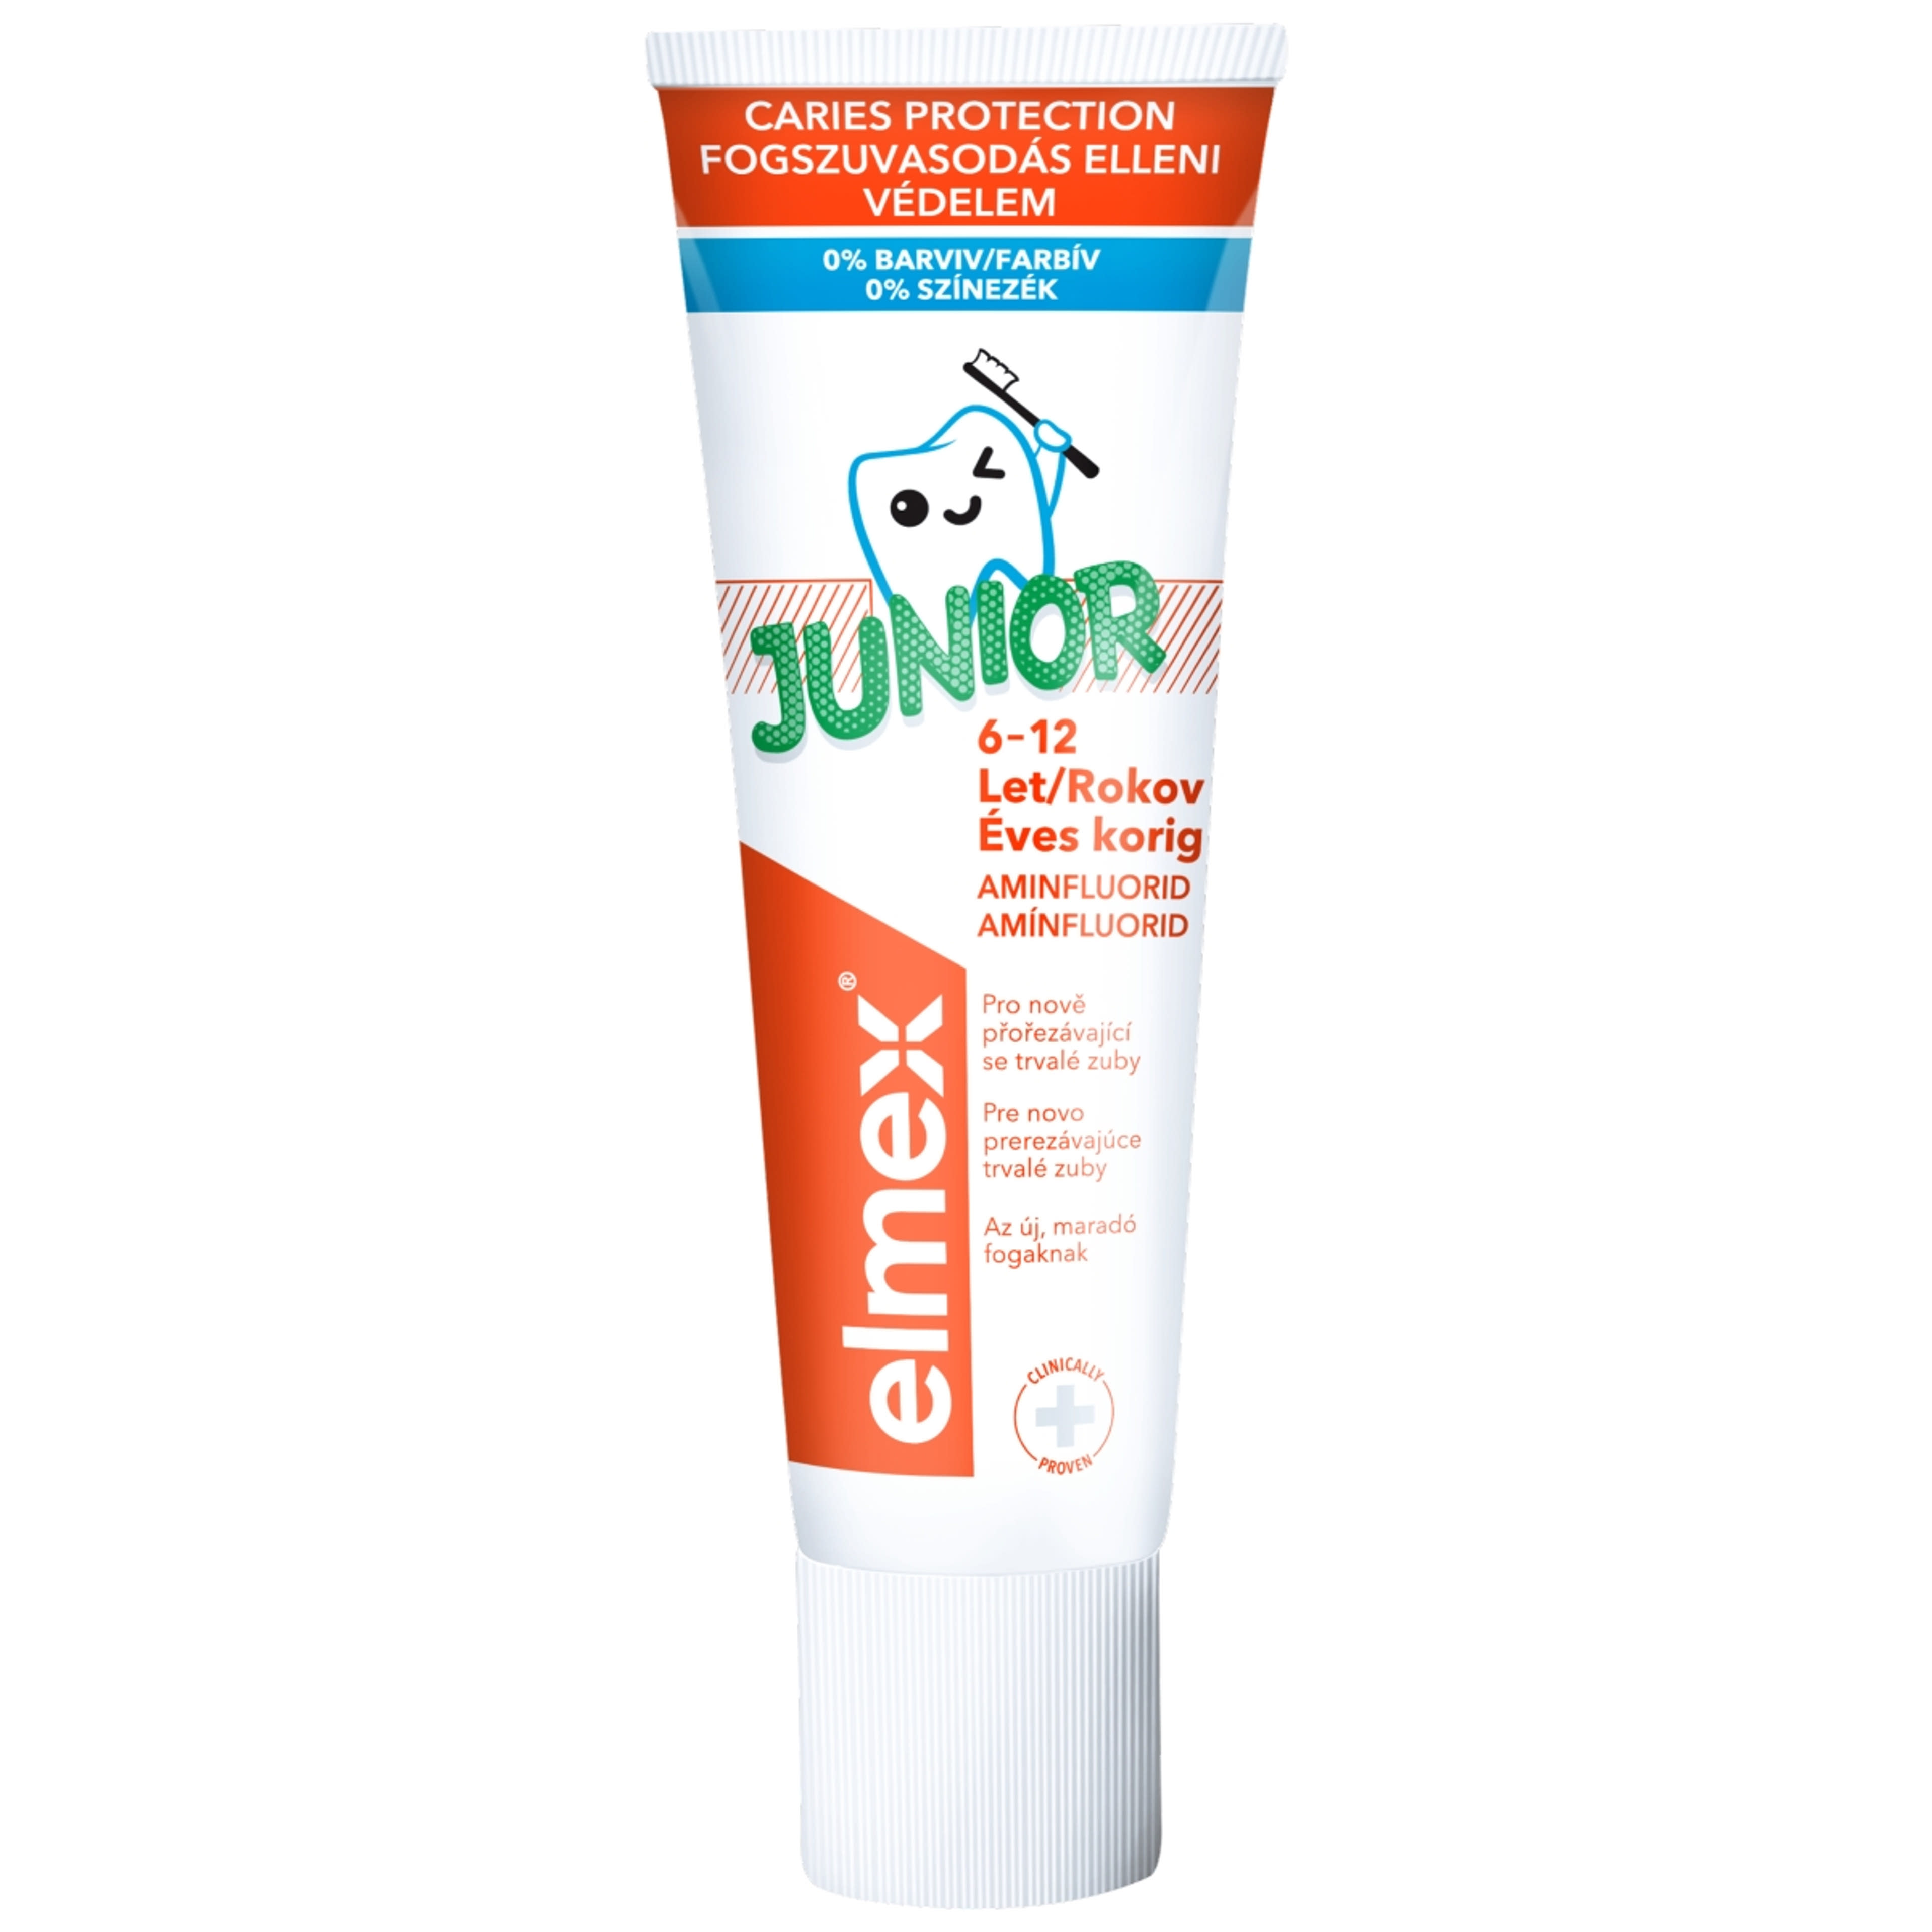 Elmex Junior fogkrém 6-12 éves korig - 75 ml-2